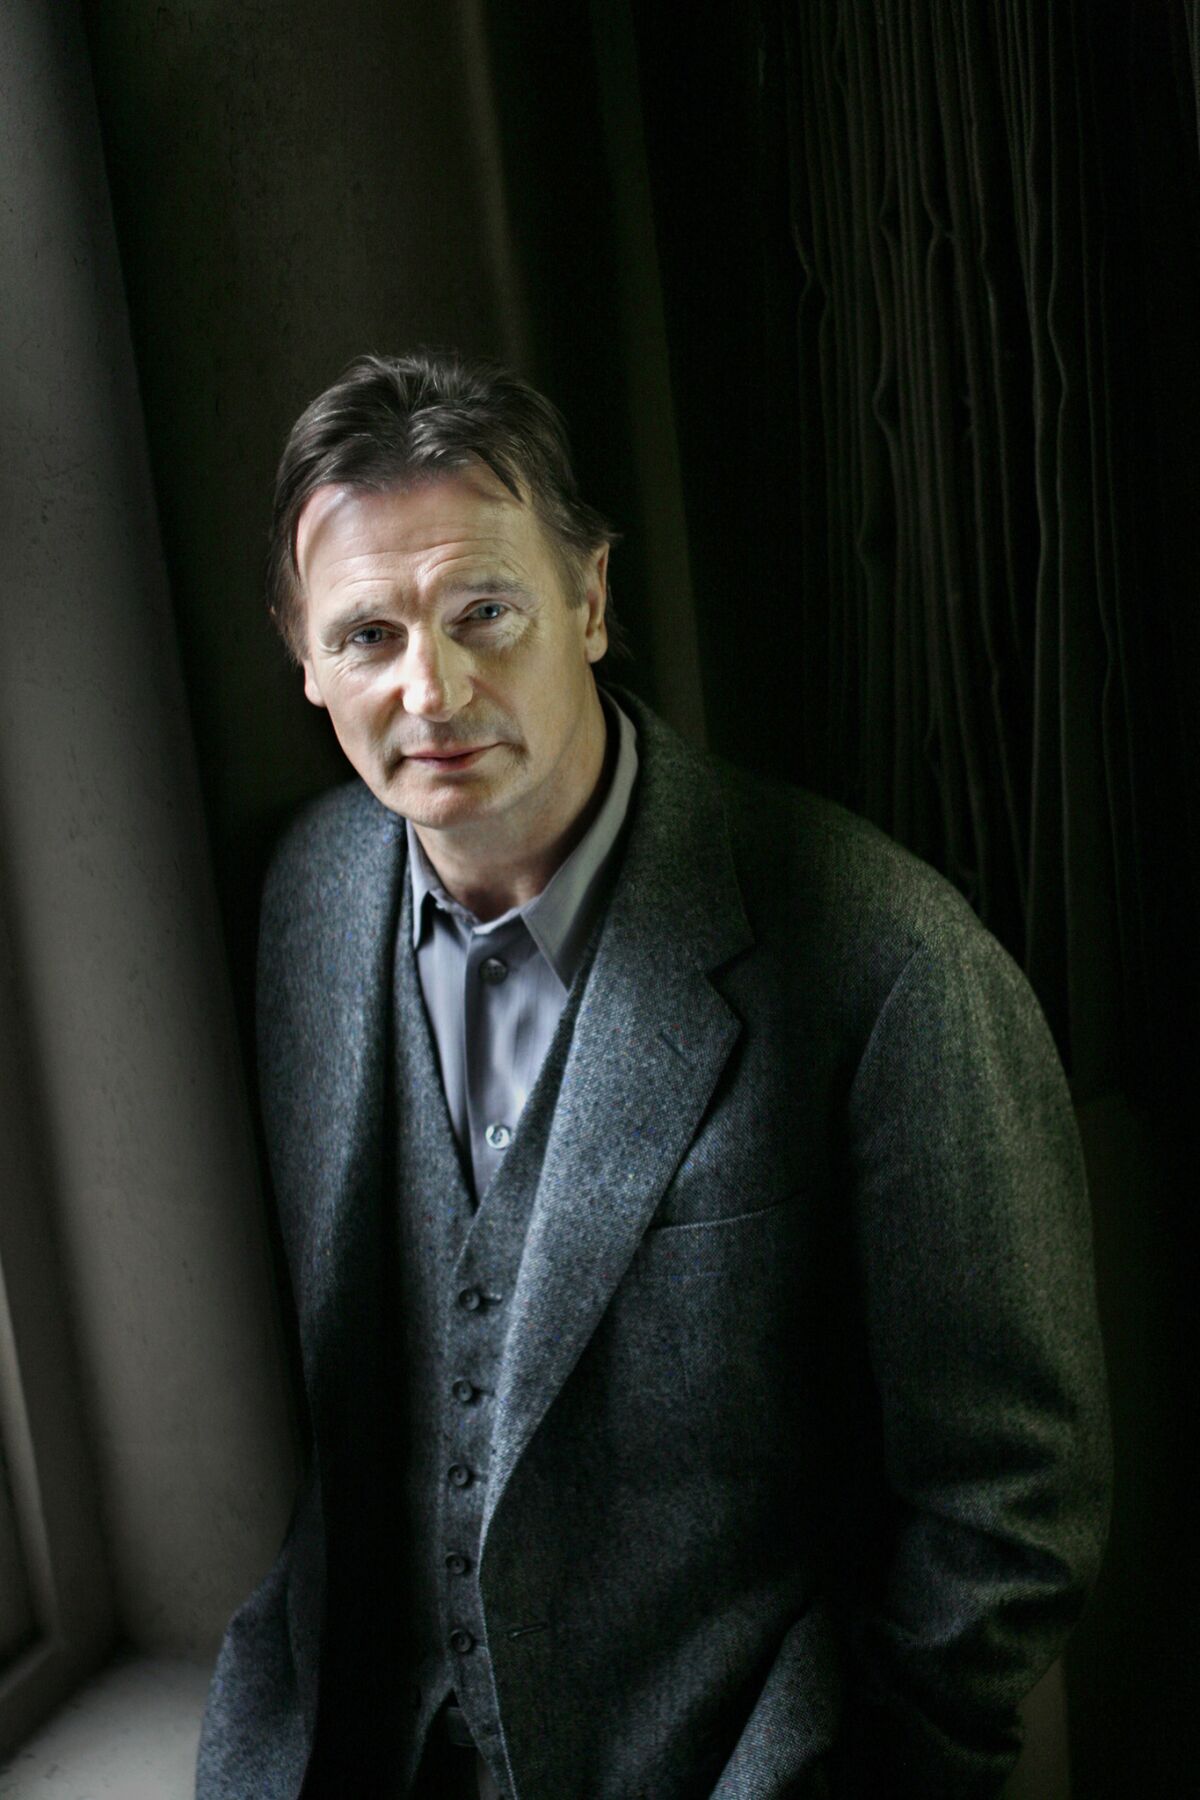 Liam Neeson is set to star in an adaptation of Shusaku Endo's novel "Silence."